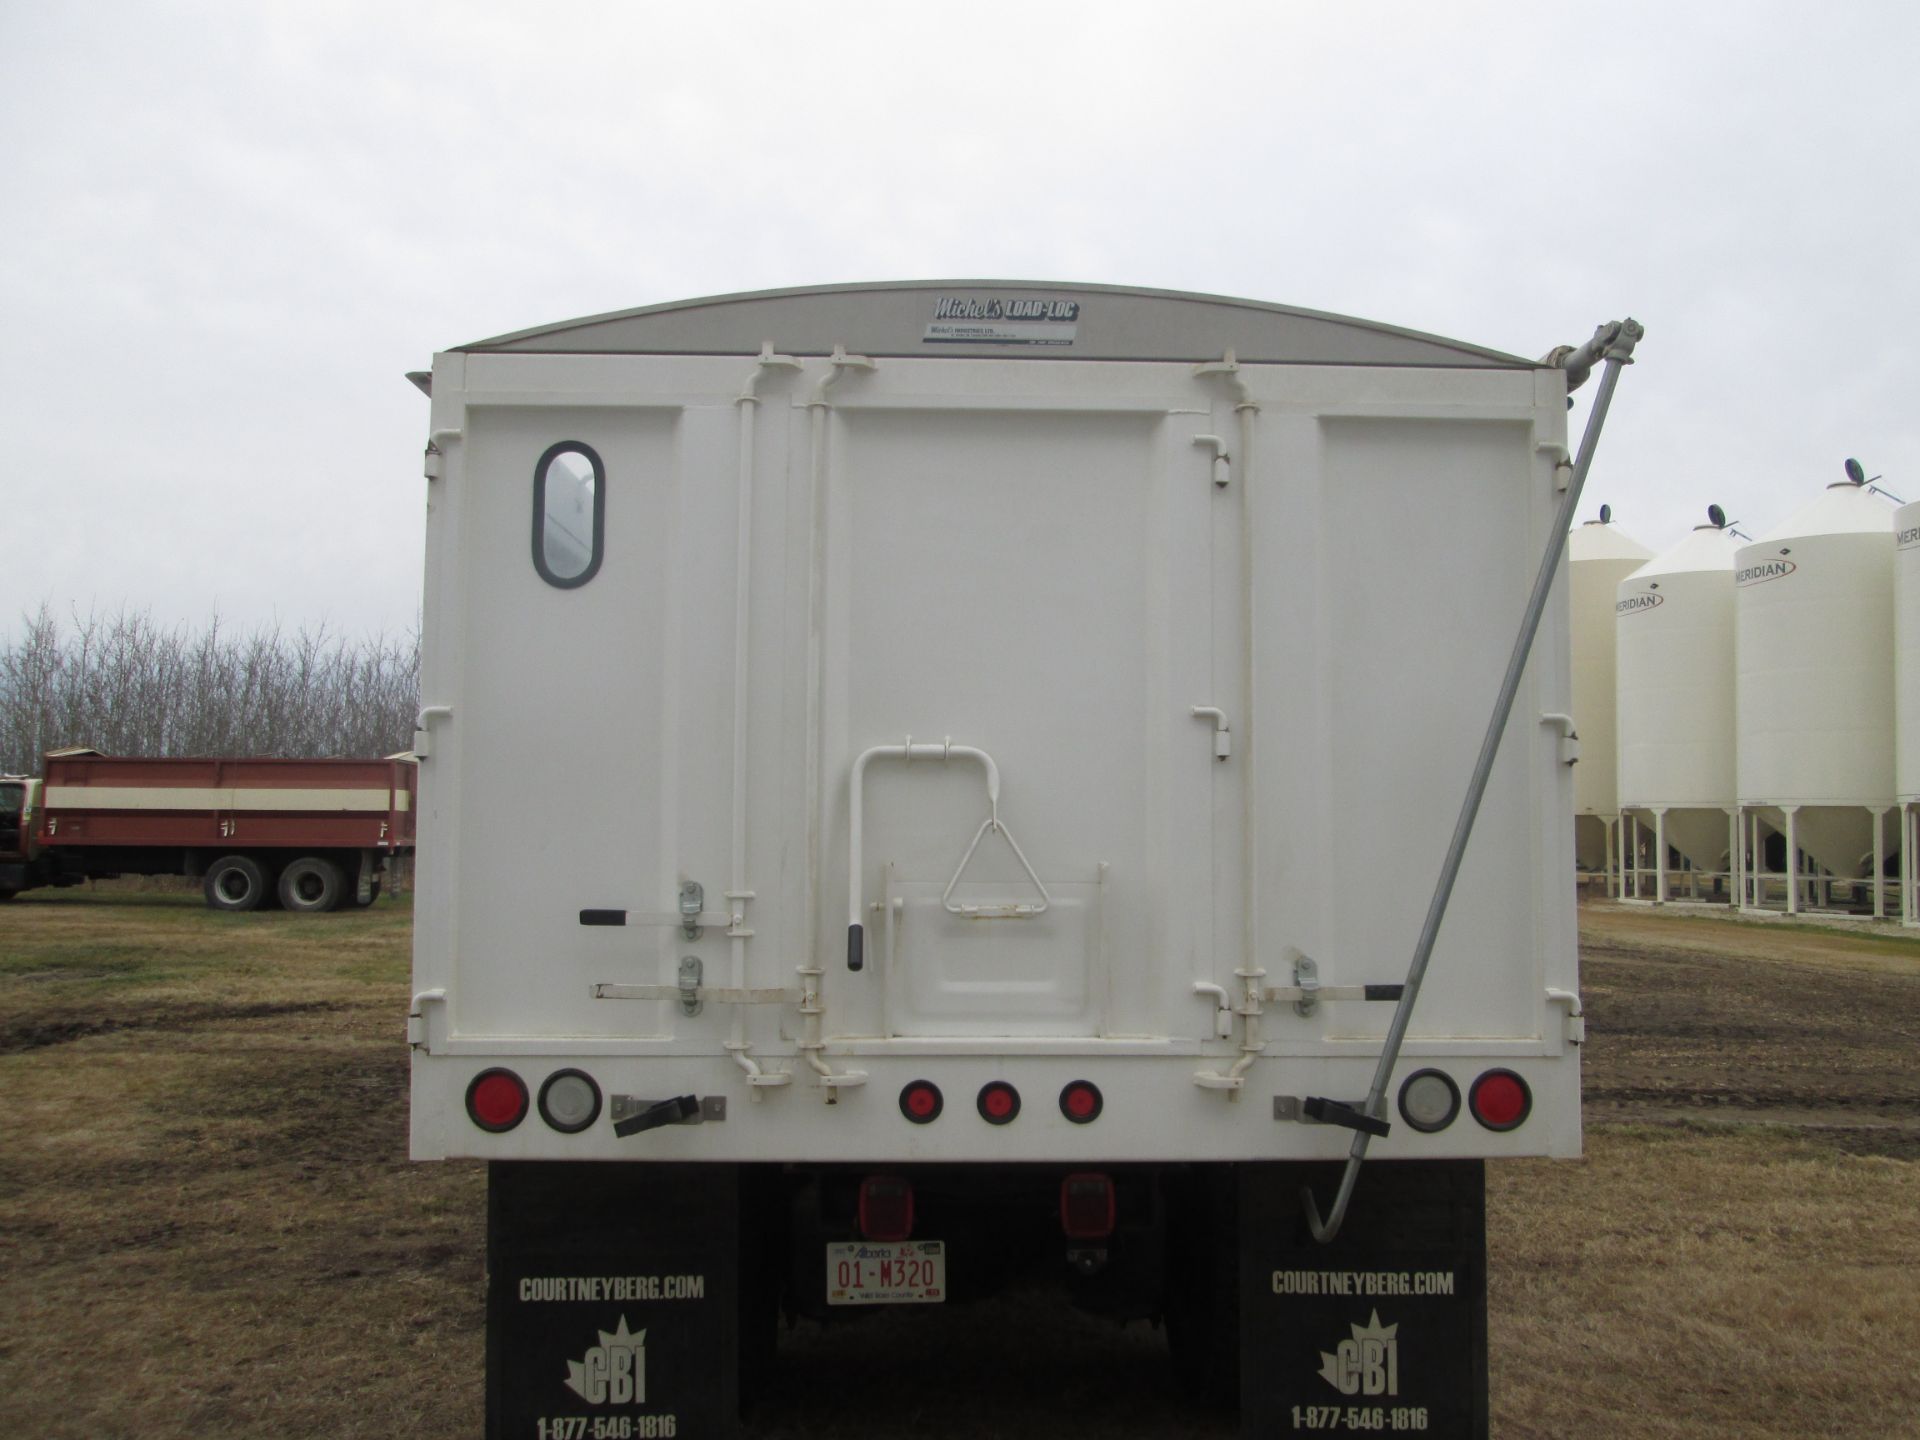 2012 IH Durastar 4400 TA grain truck w/ 20' steel box & hoist (Courtney Berg), Allison auto trans, - Image 7 of 19